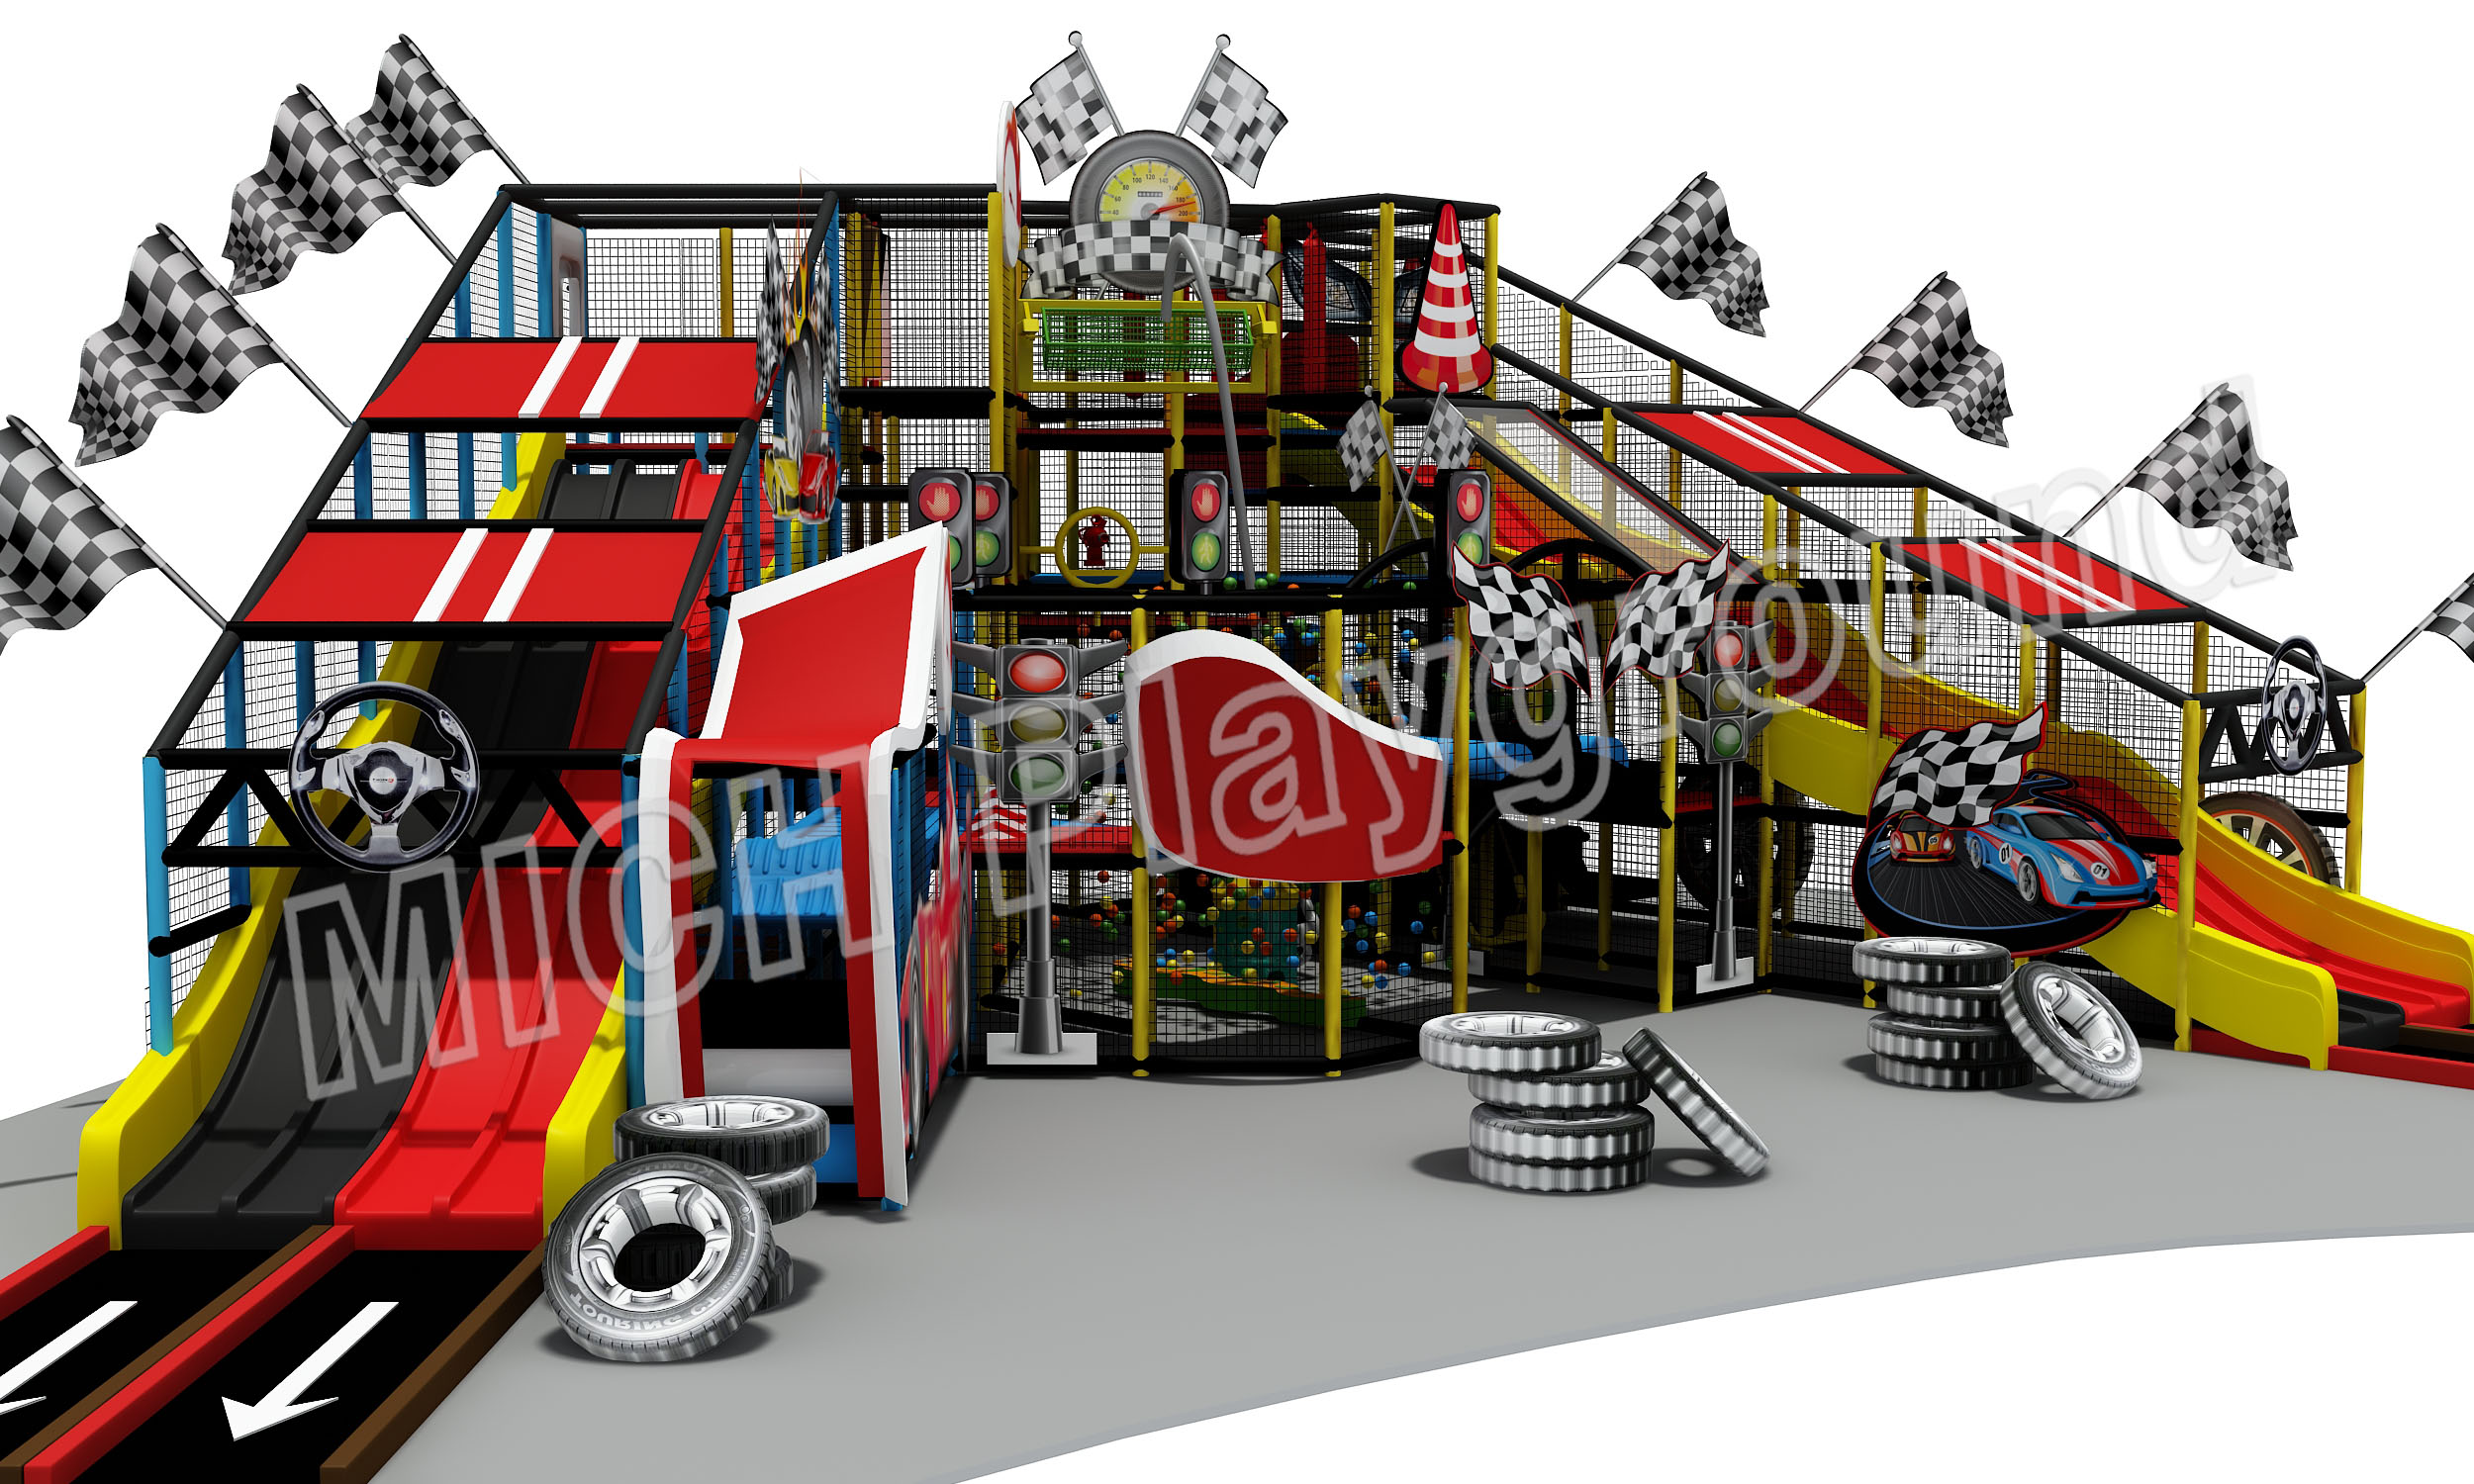 F1 Racing Car Theme Deals Kids Indoor Park